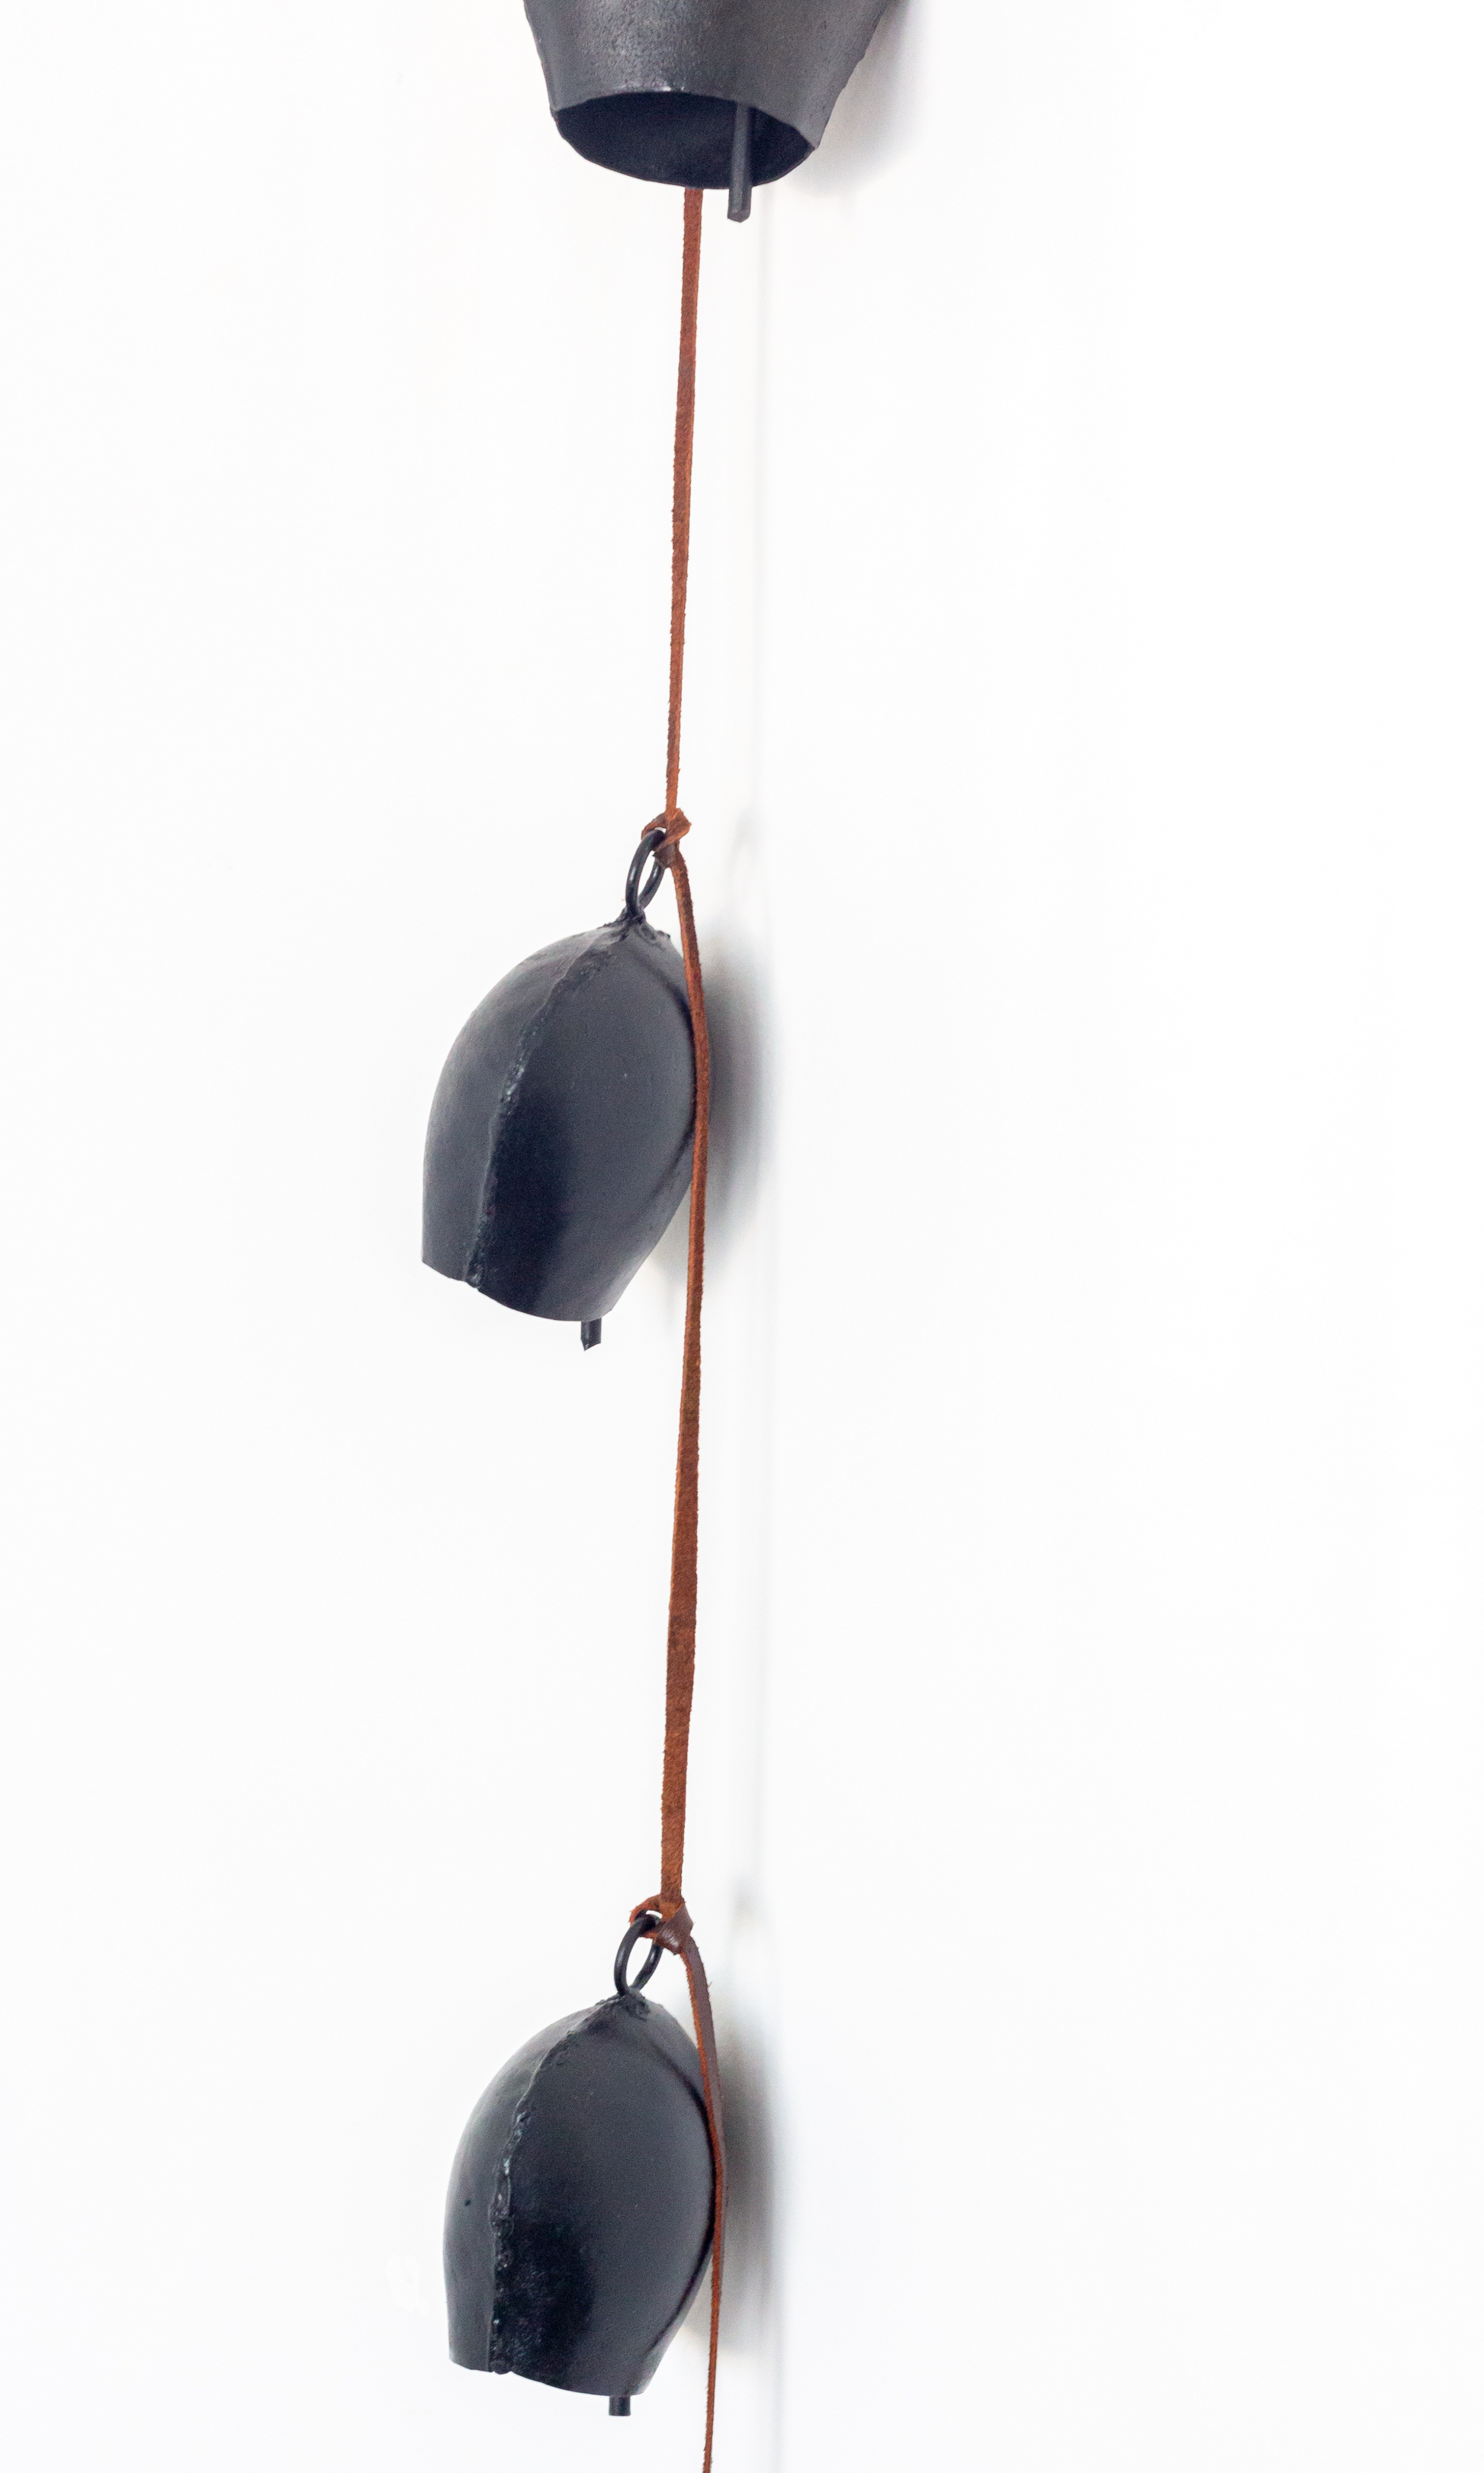 5 Traditional Hanging Iron Bells - Handmade, Dangling, Black - Aksa